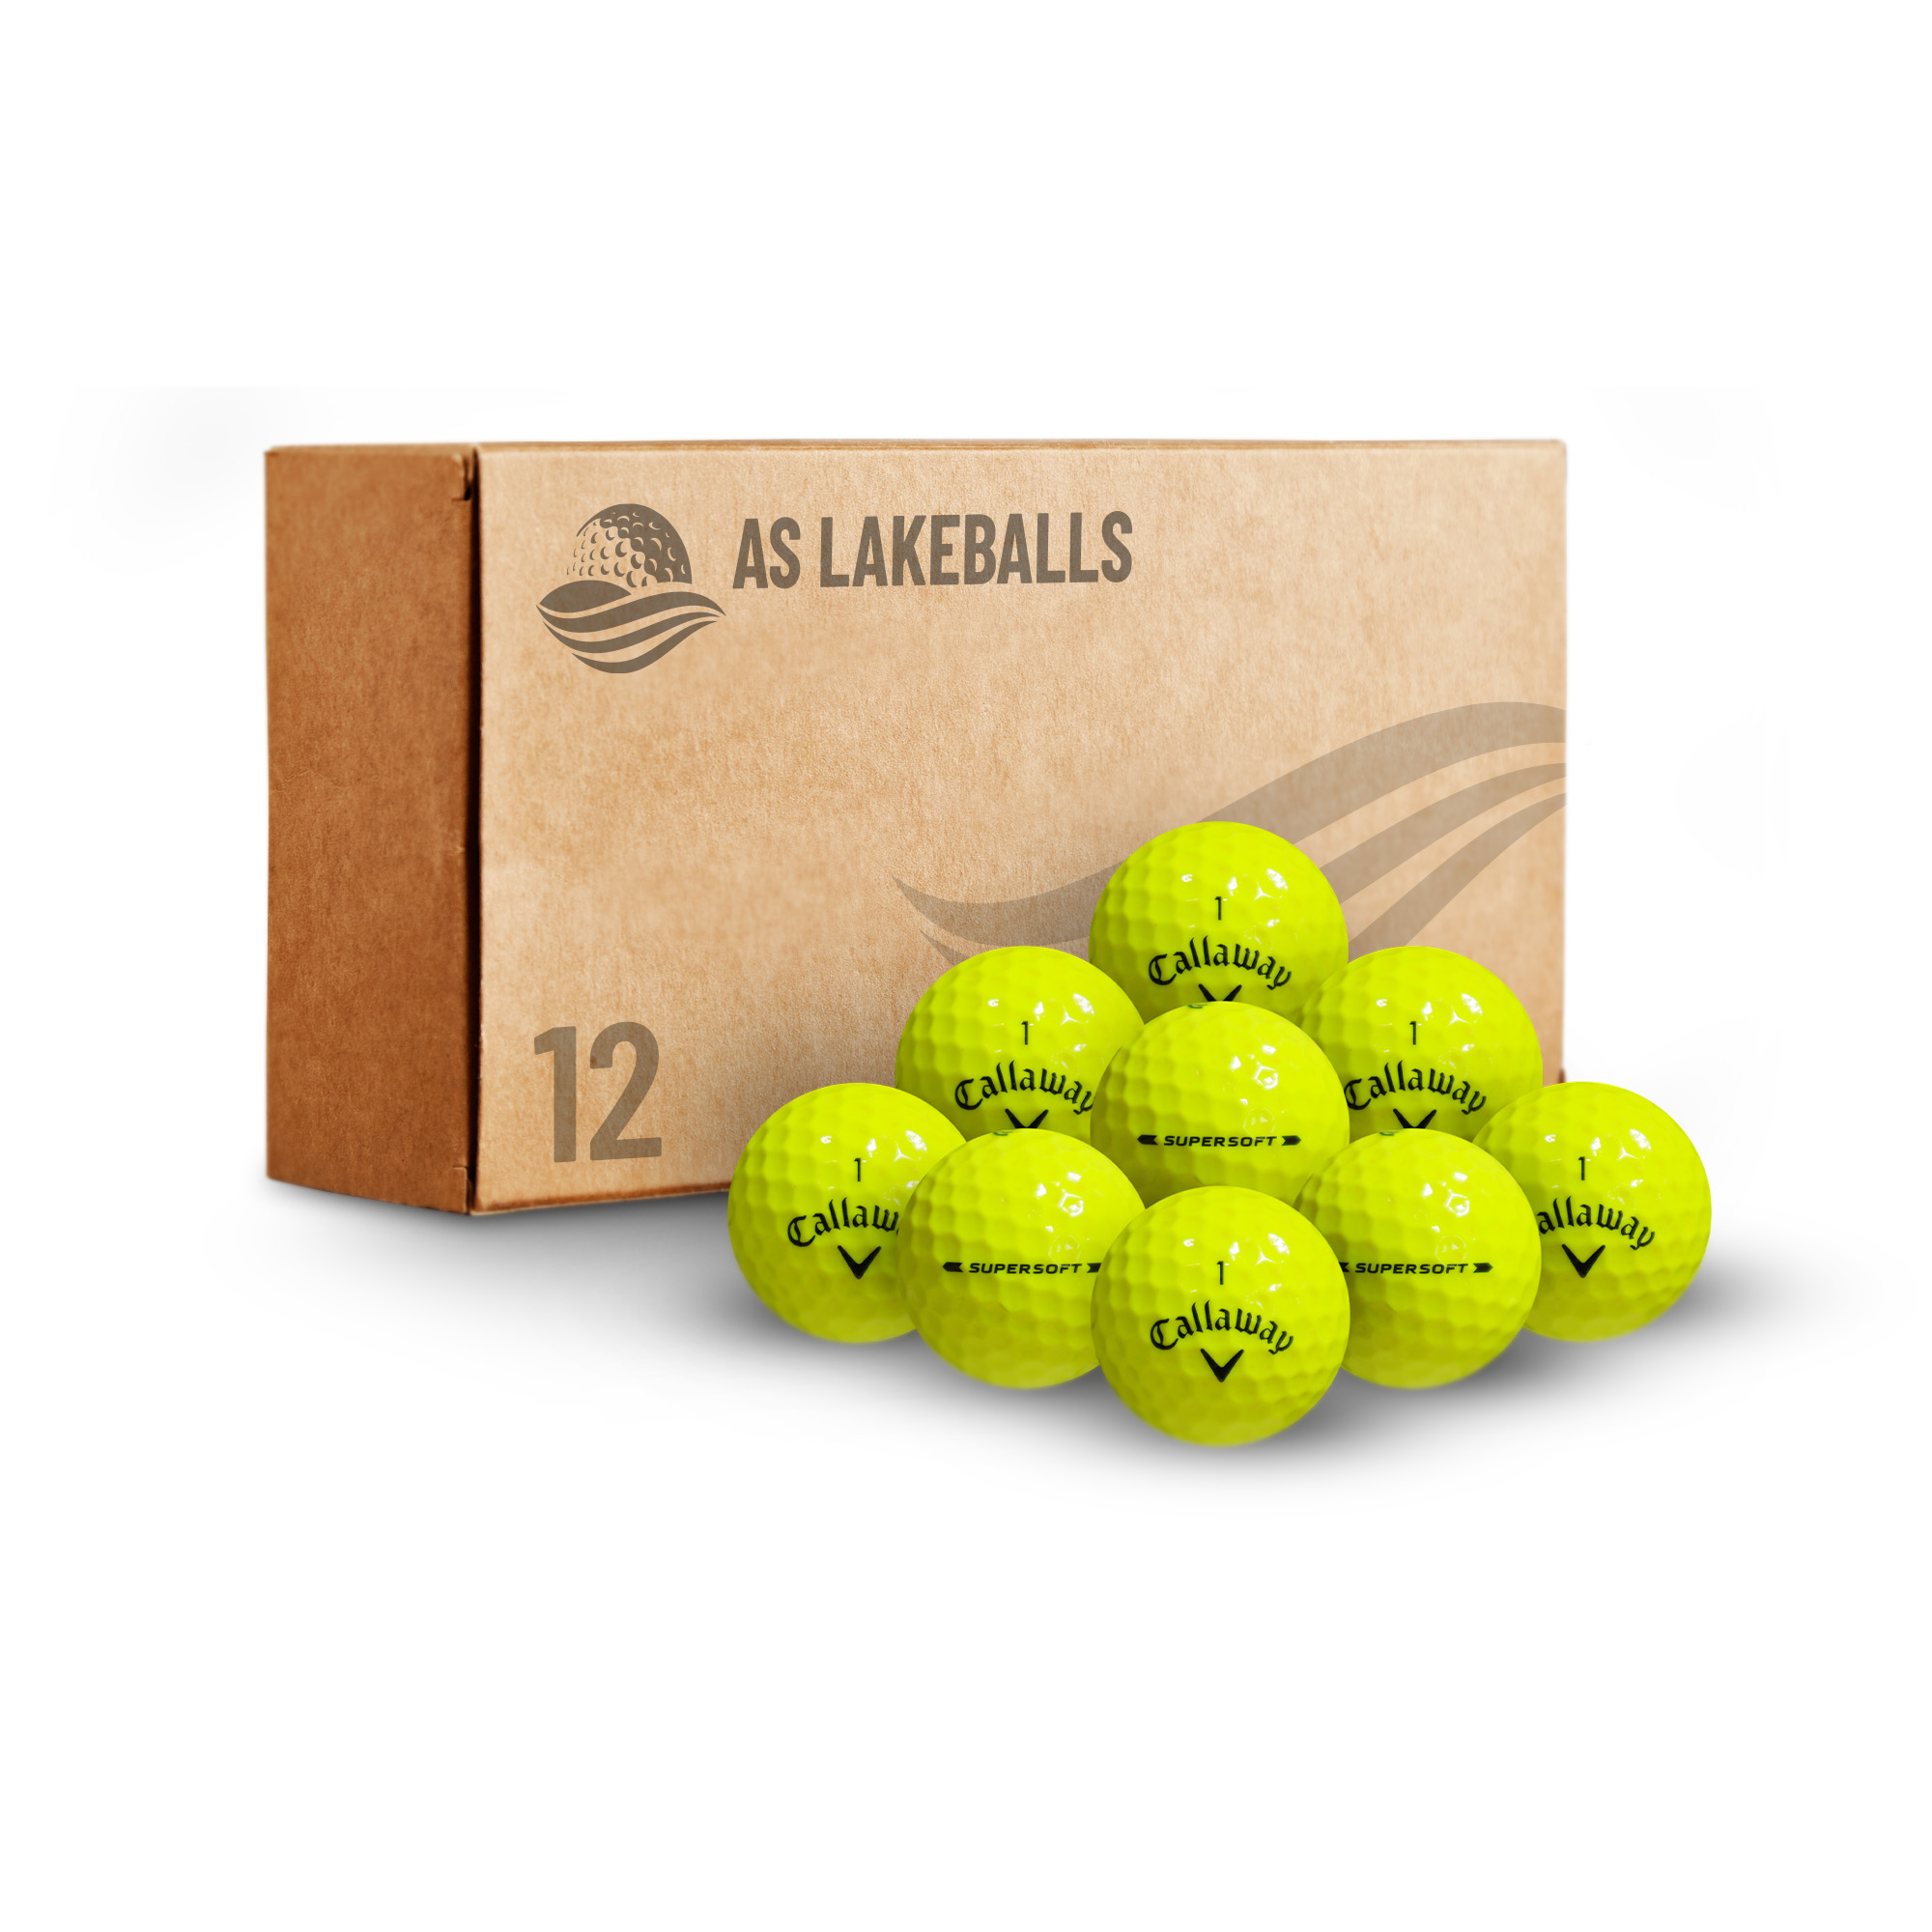 12 Stück Callaway Supersoft Gelb AA-AAA Lakeballs bei AS Lakeballs günstig kaufen